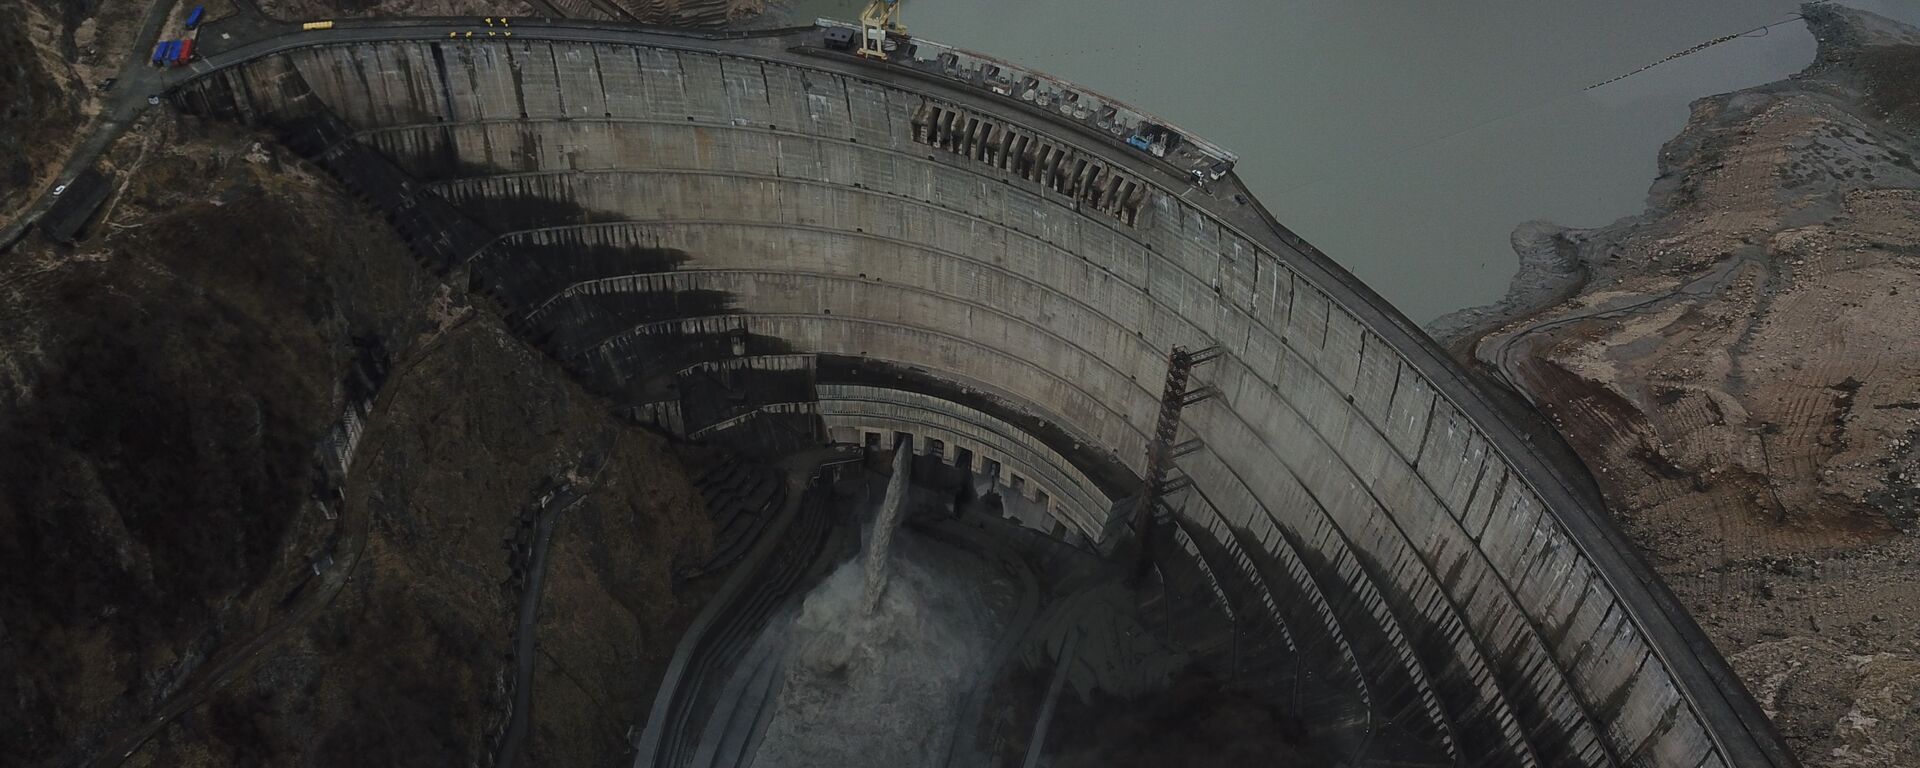 Ингури ГЭС - вид сверху на водохранилище и плотину - Sputnik Грузия, 1920, 04.03.2021